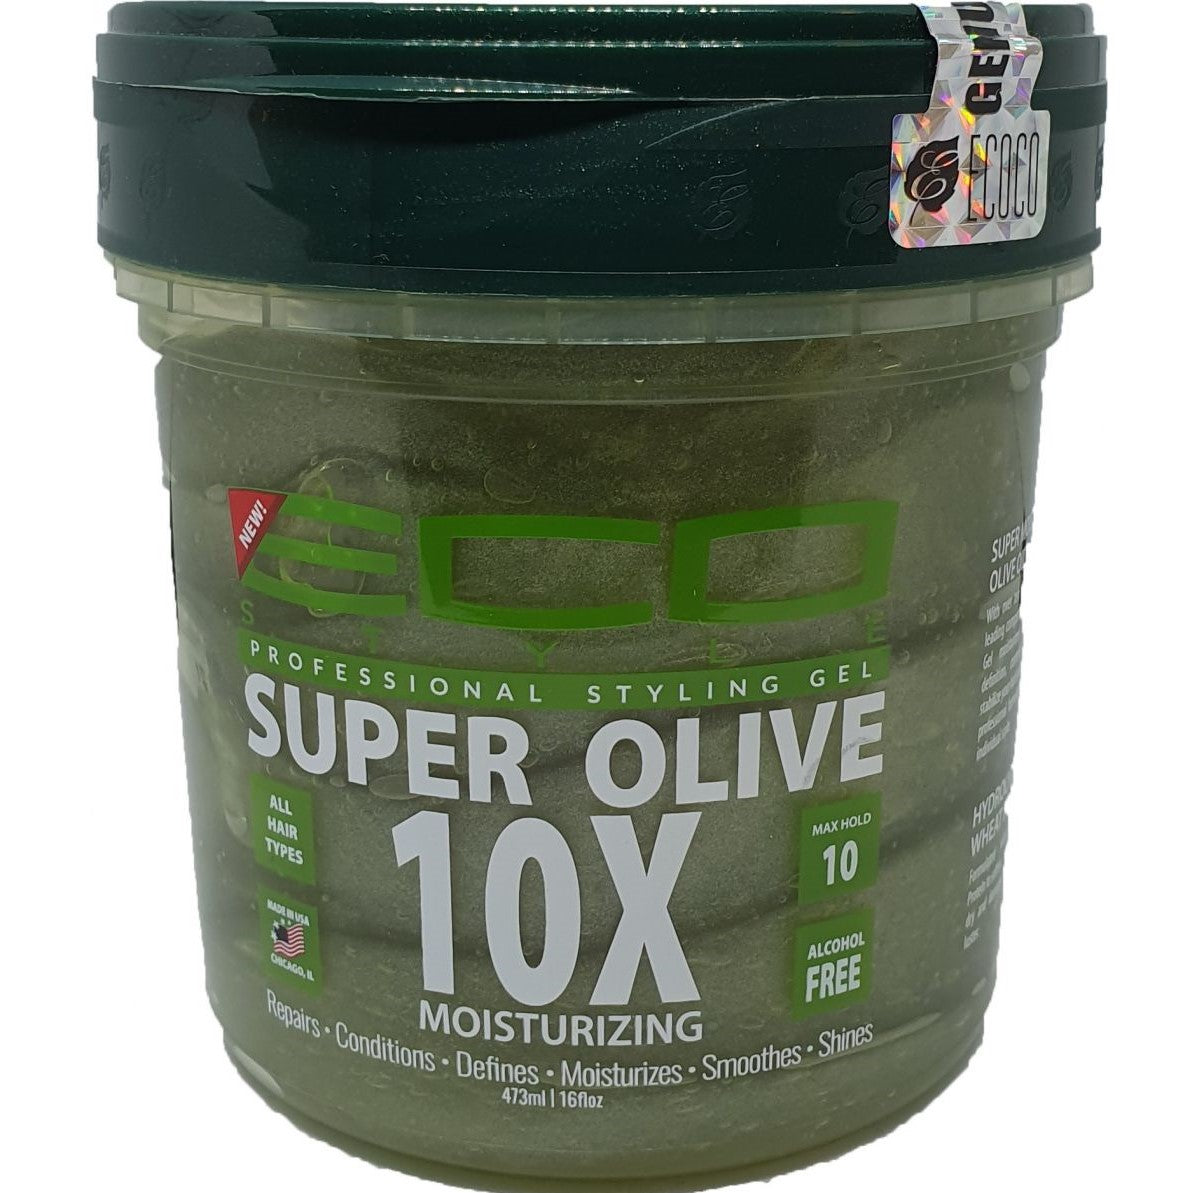 Eco Styler Styling Gel Super Olive 10X Moisturizing 473ml /16oz